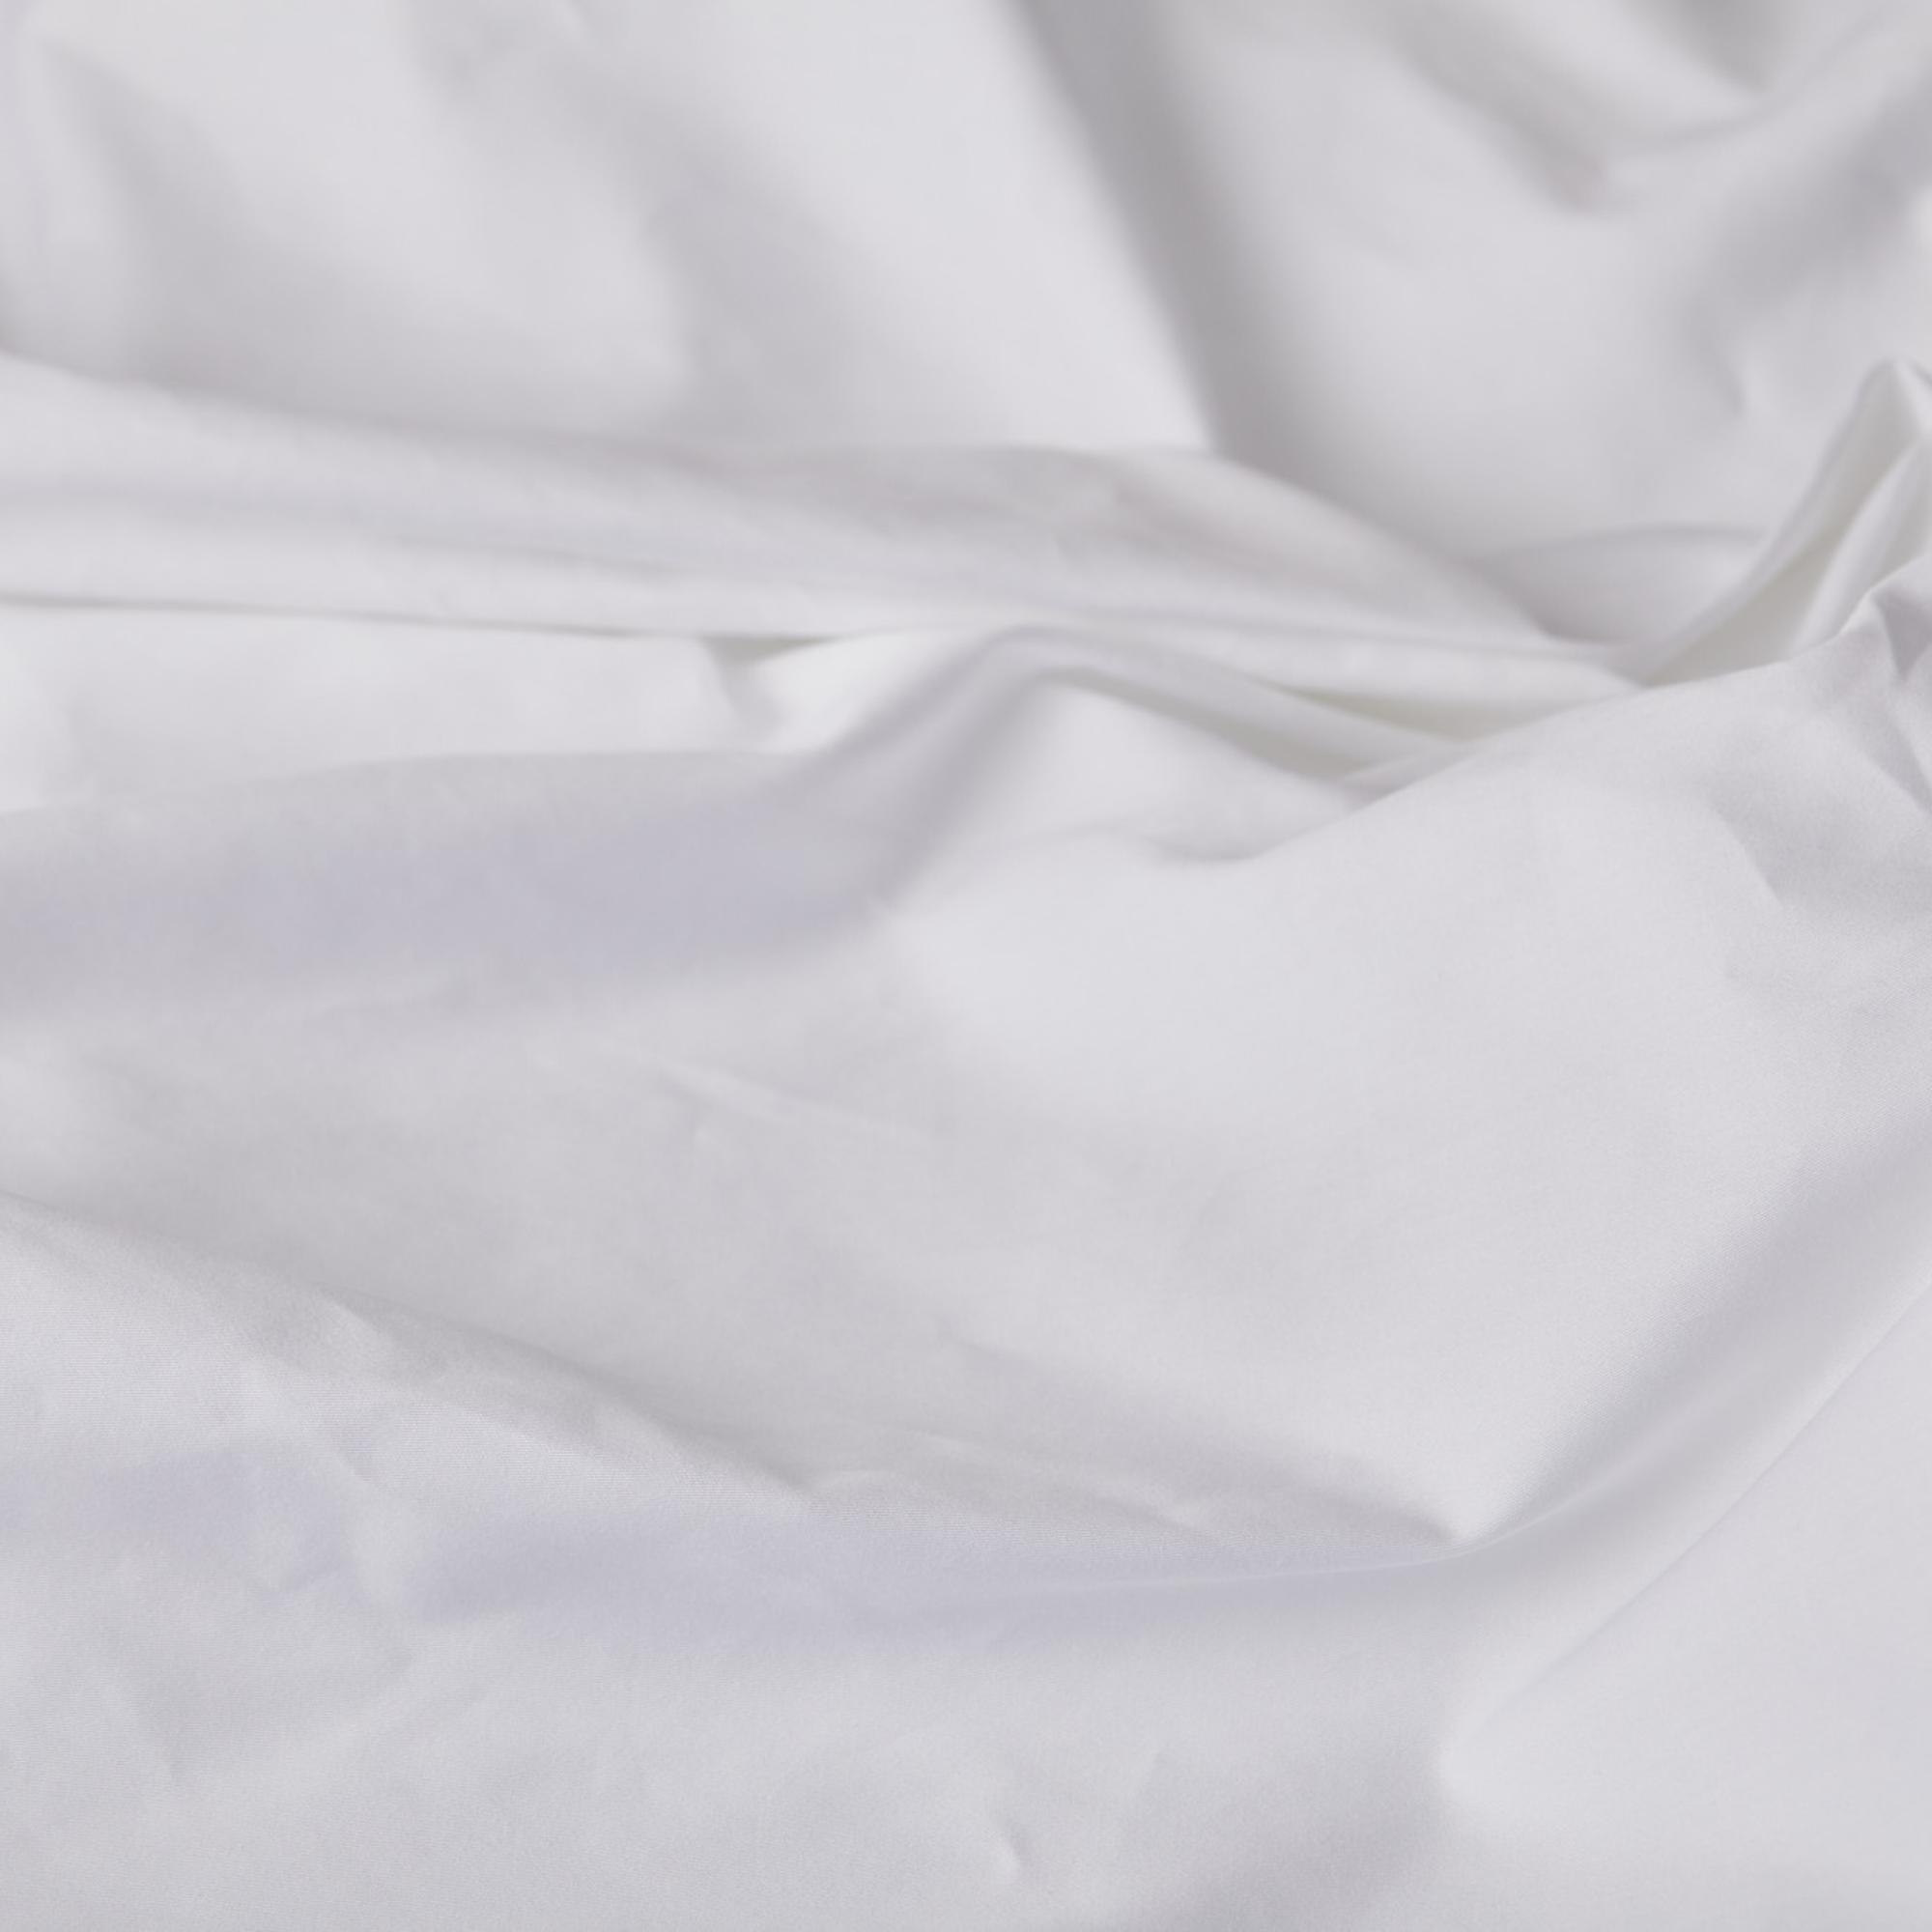 Cotton Rich Fabric Close Up White 3